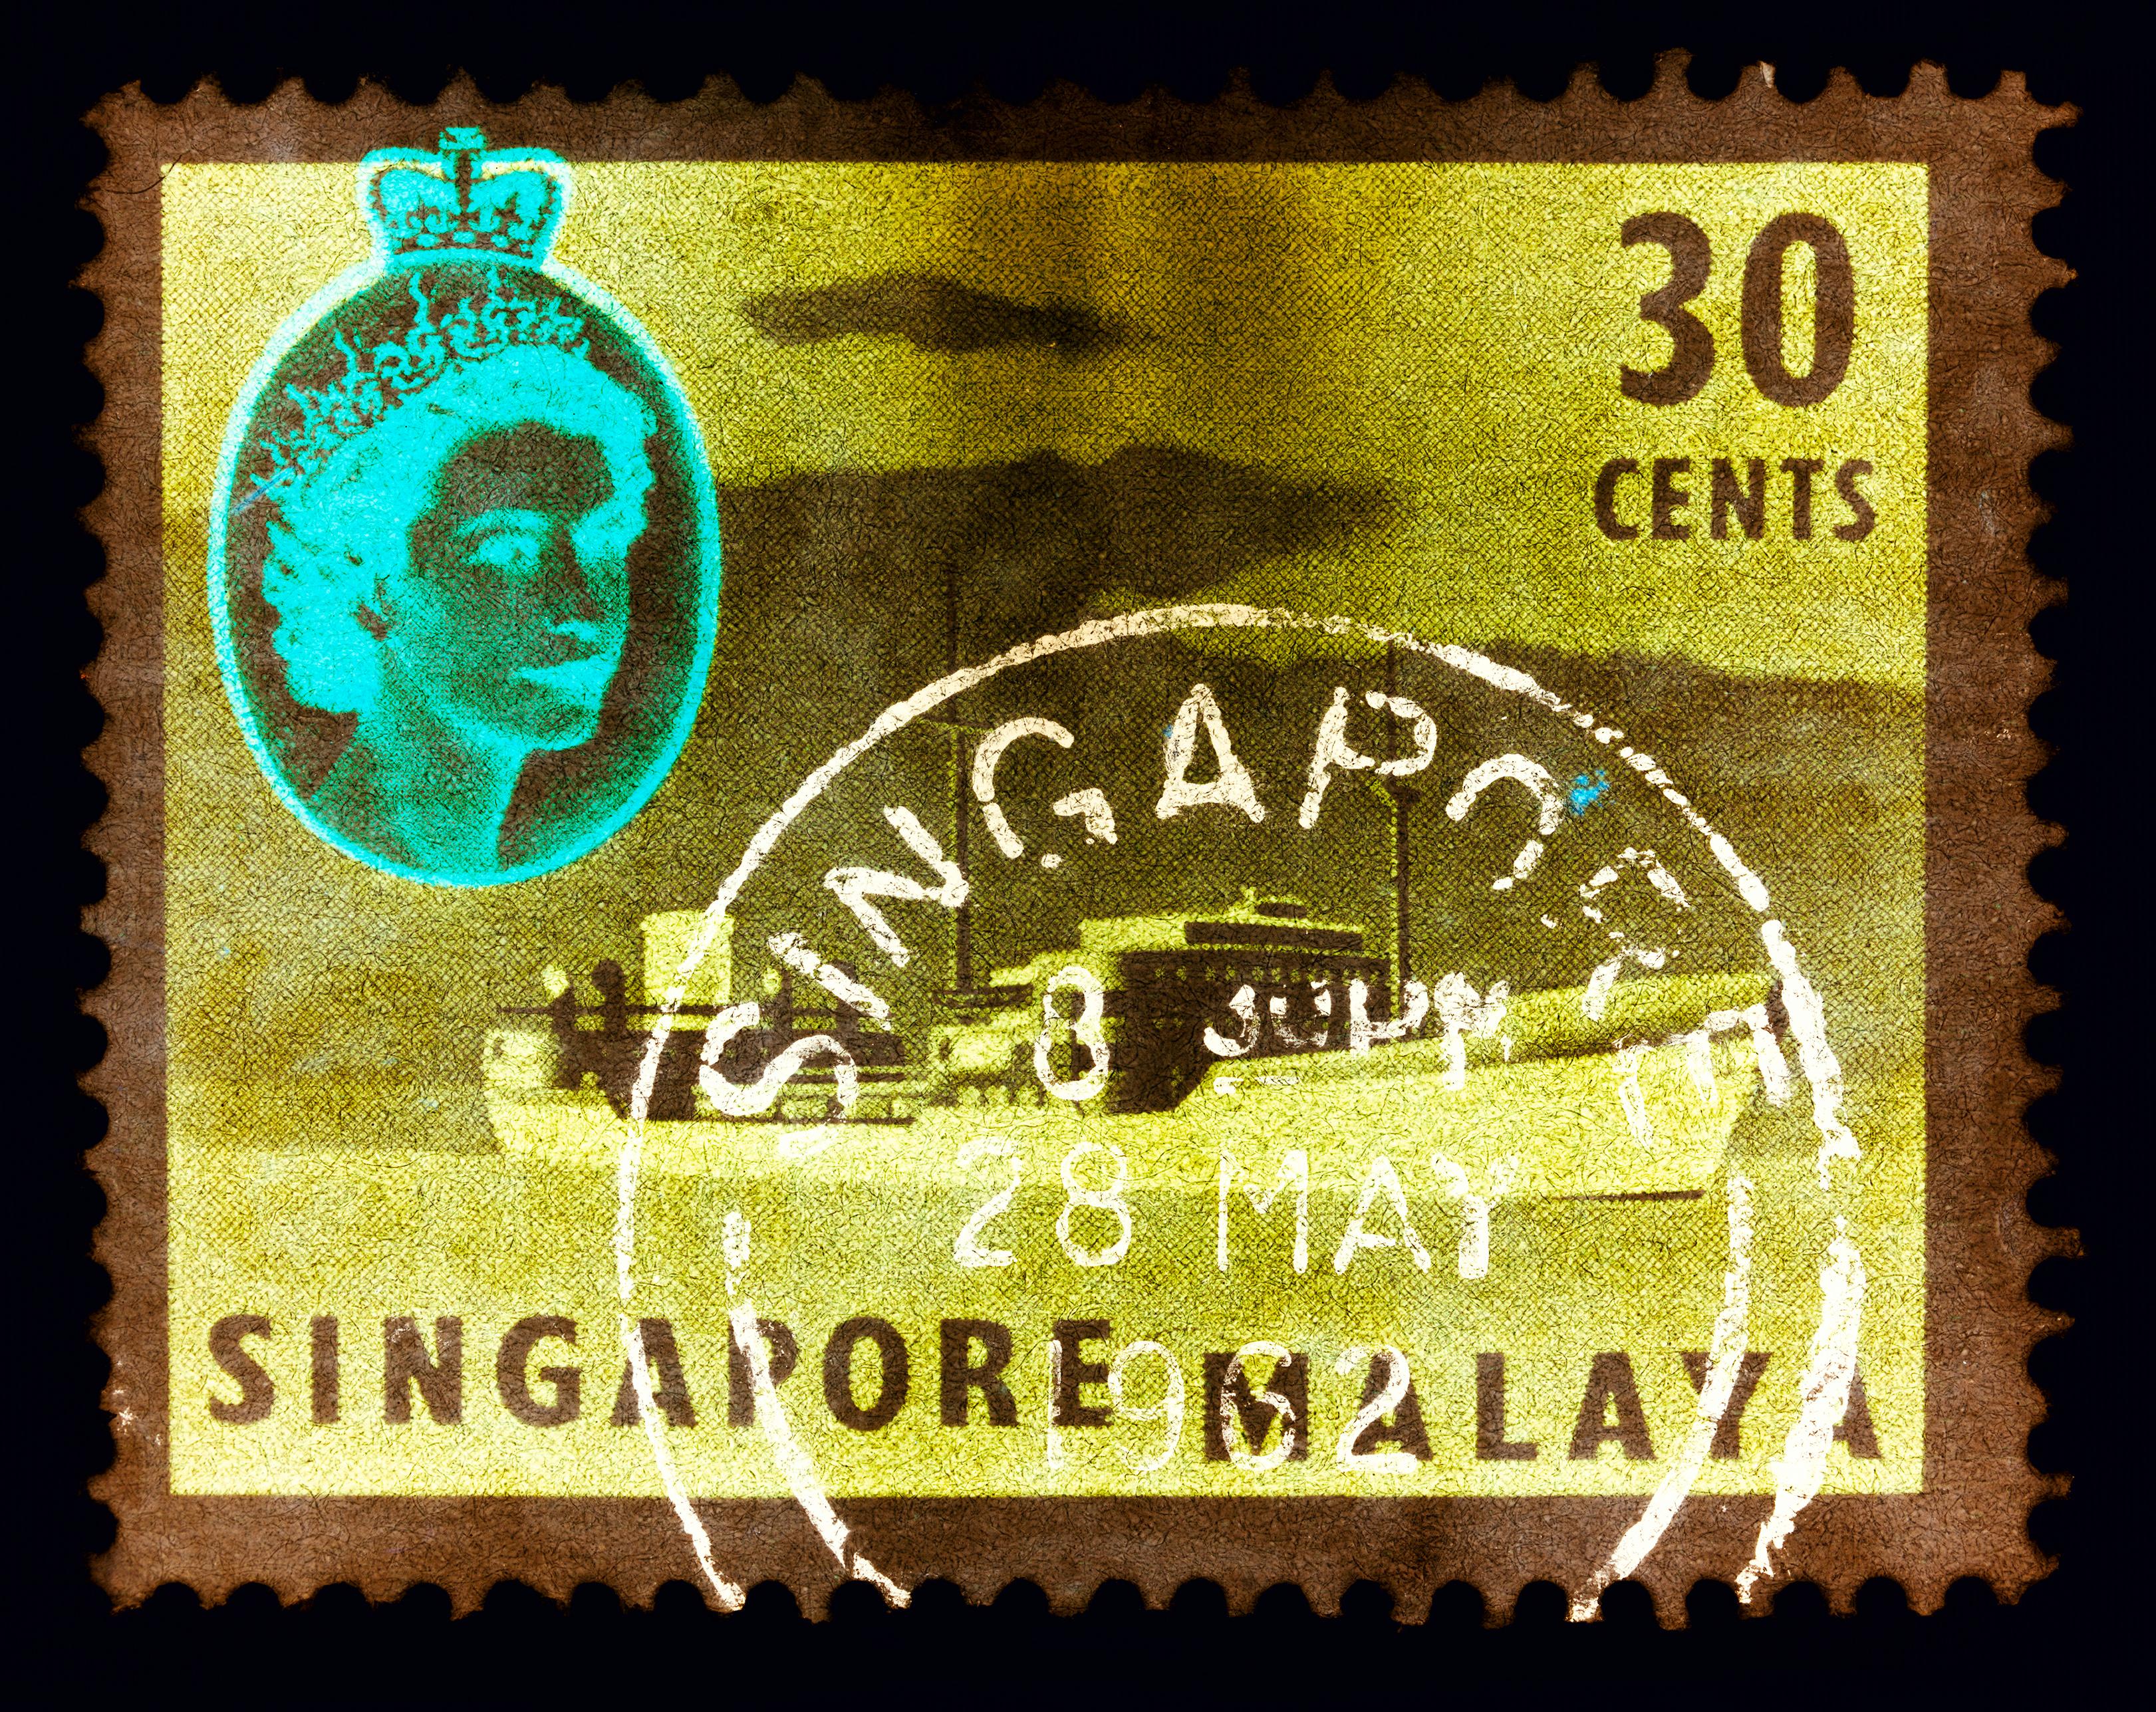 Heidler & Heeps Print - Singapore Stamp Collection, 30 Cents QEII Oil Tanker Khaki - Pop Art Color Photo